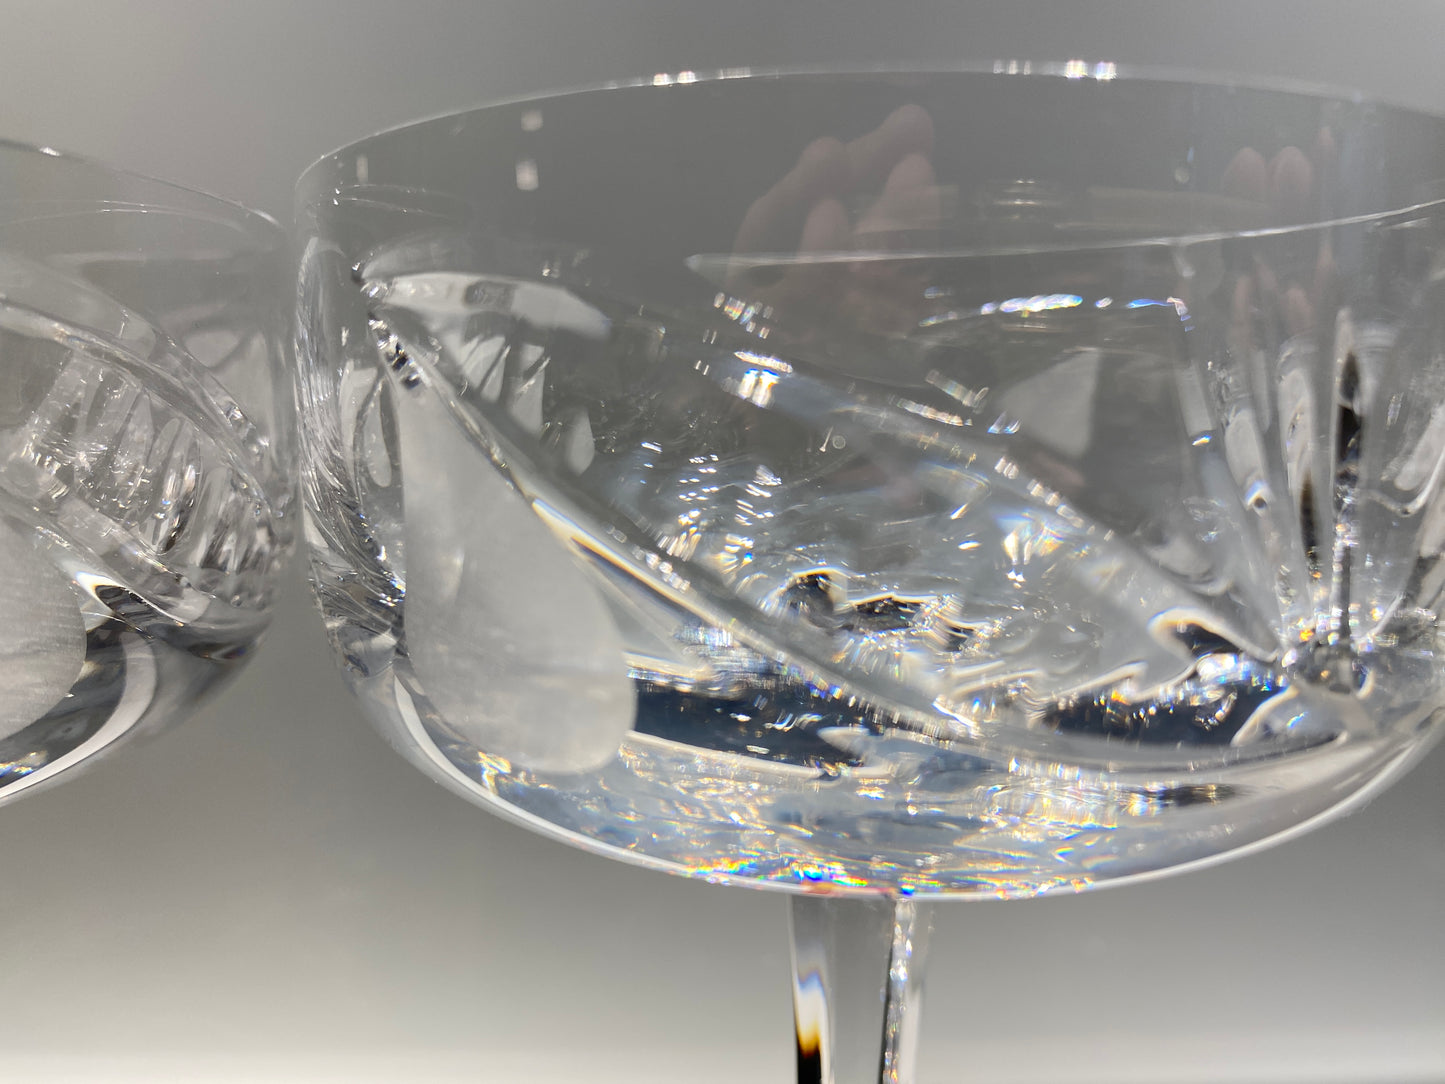 Five Vintage ROGASKA Crystal Champagne Tall Sherbet / Coupes Design Cut Swirl & Dot Design On Bowl pattern RGS24